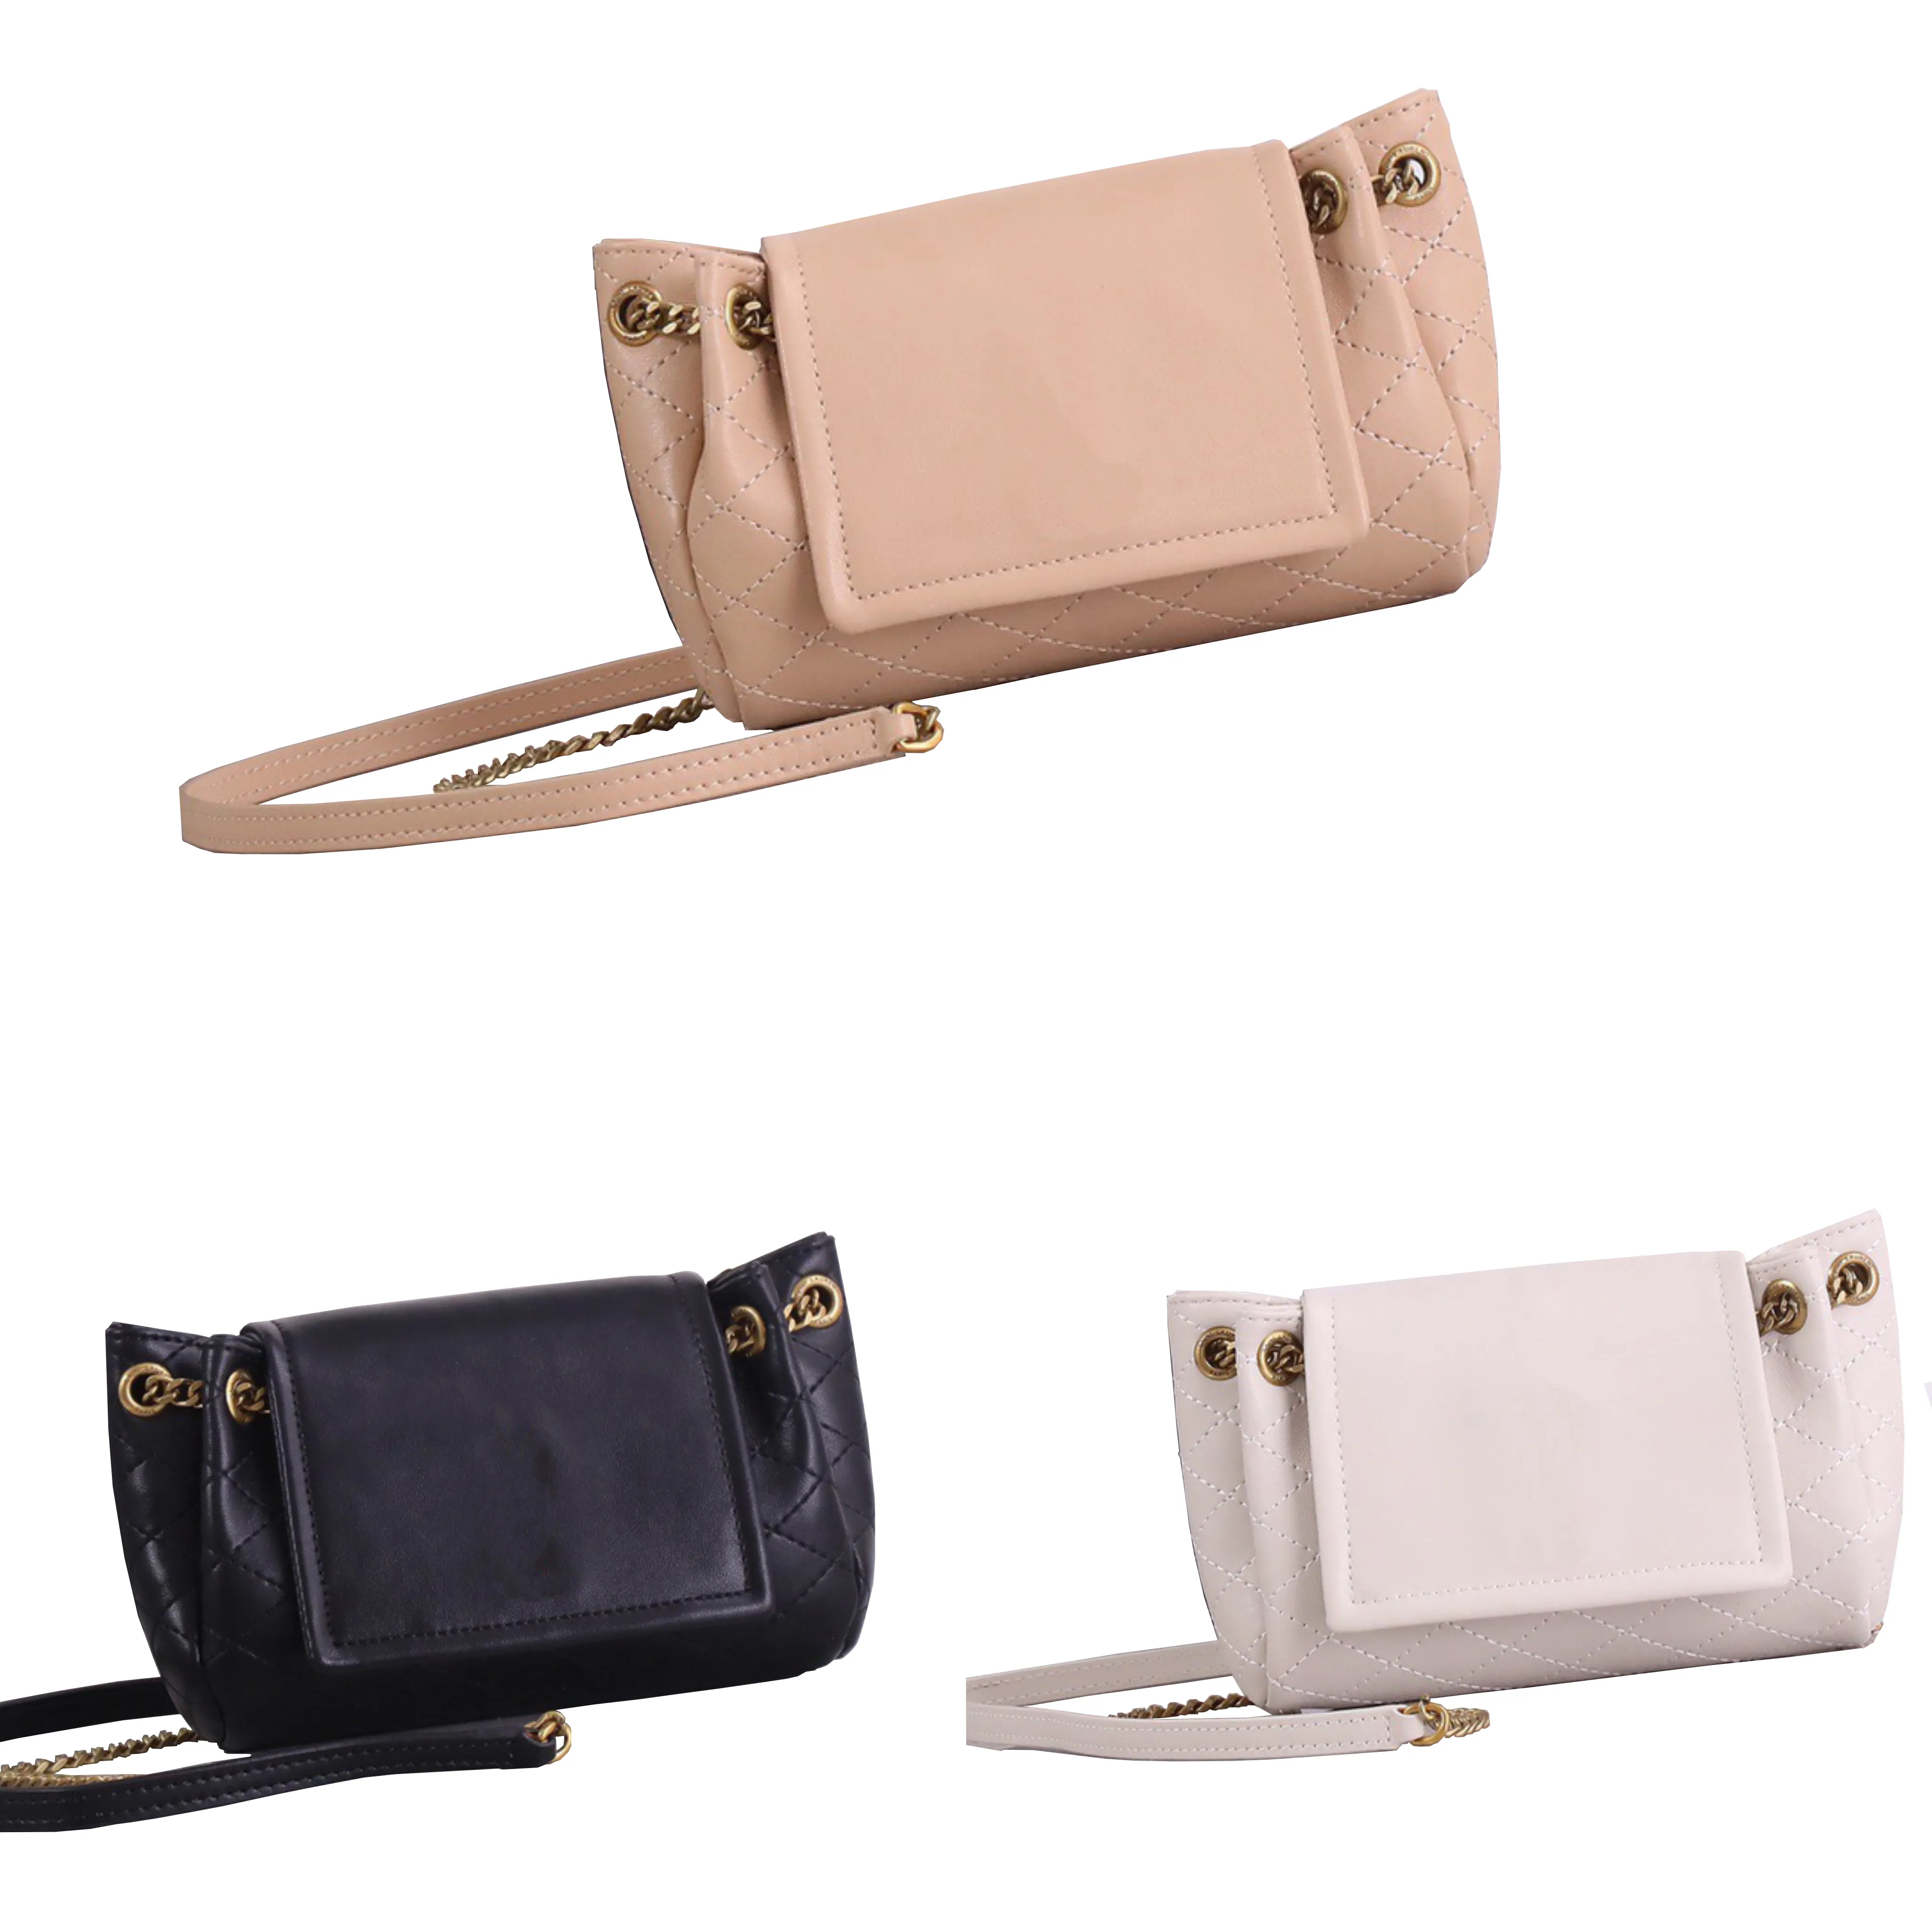 Luxury designer bag purse Mini Nolita Bag women Shoulder bags totes laddy handbags Messenger free ship